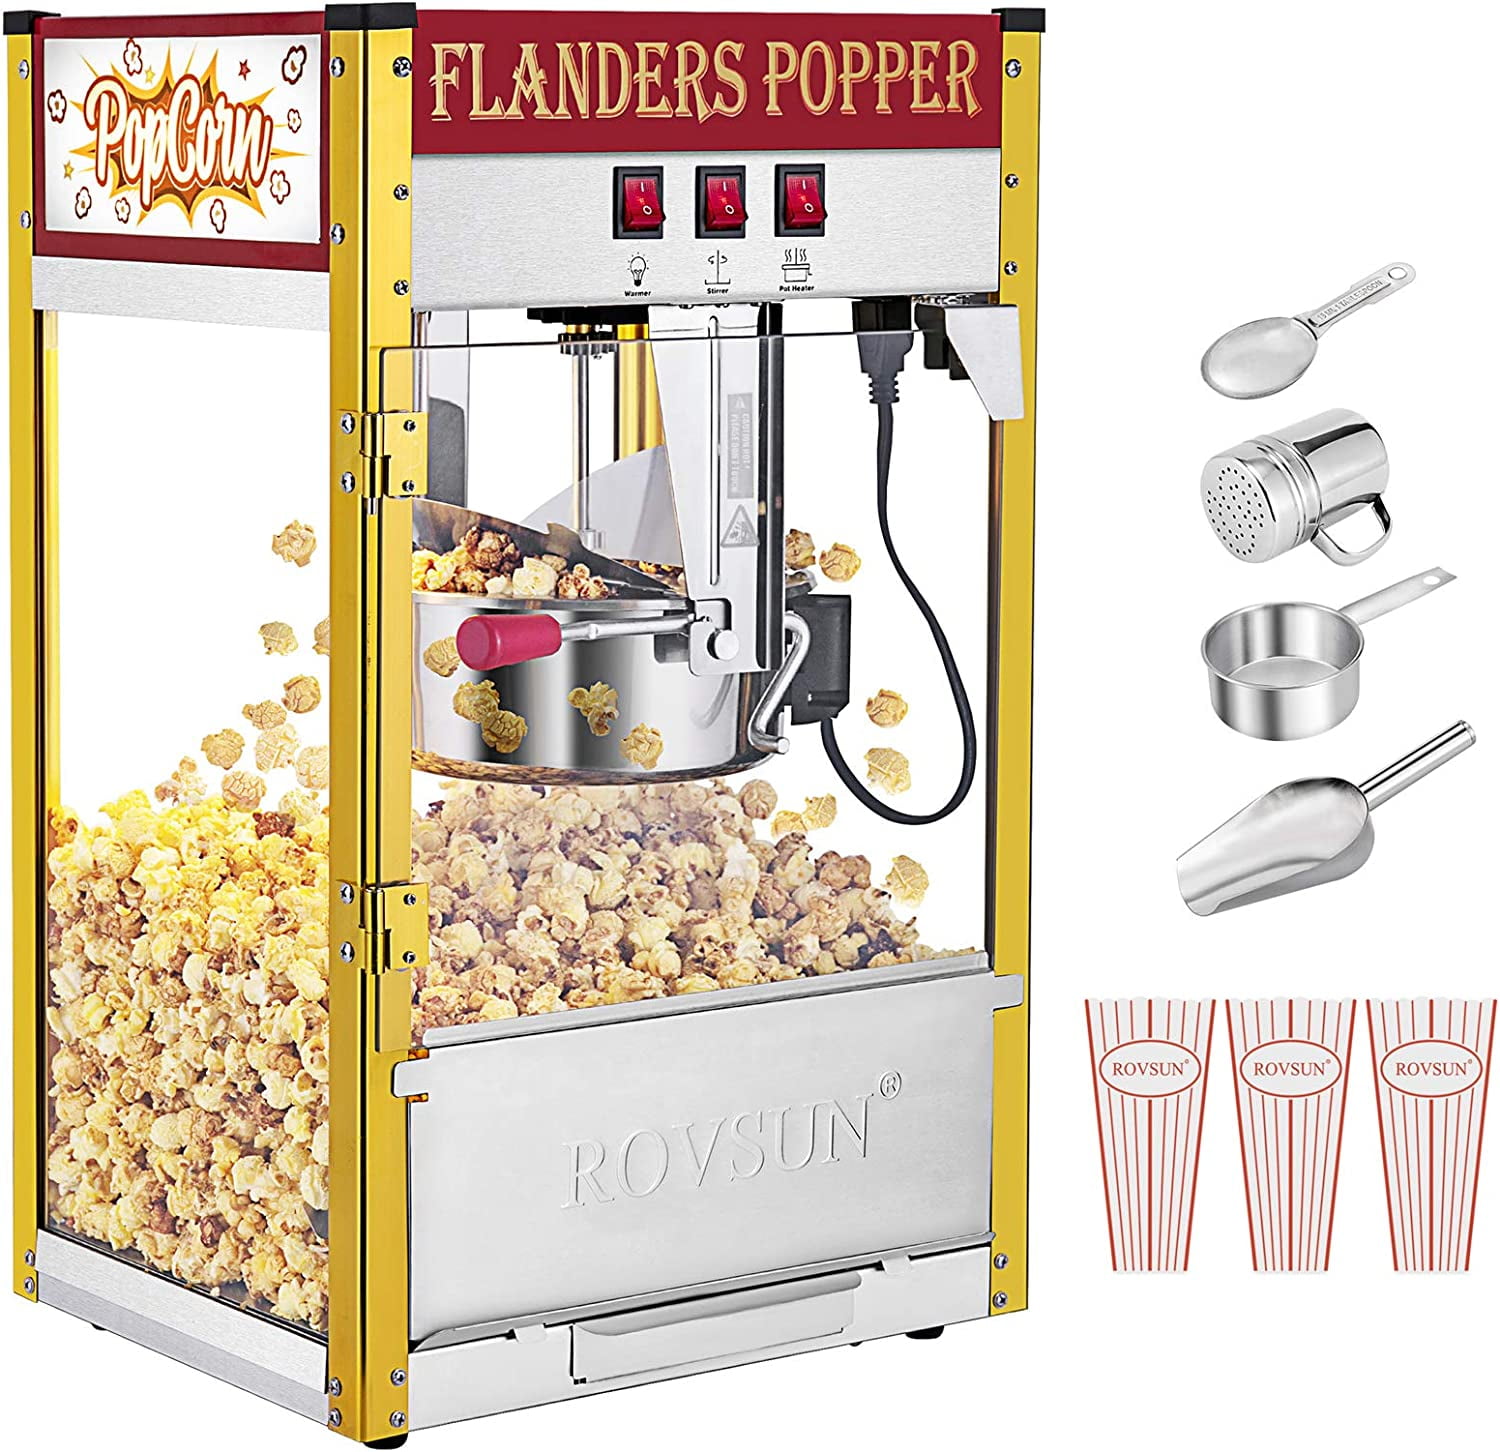 CAREY Popcorn Popper